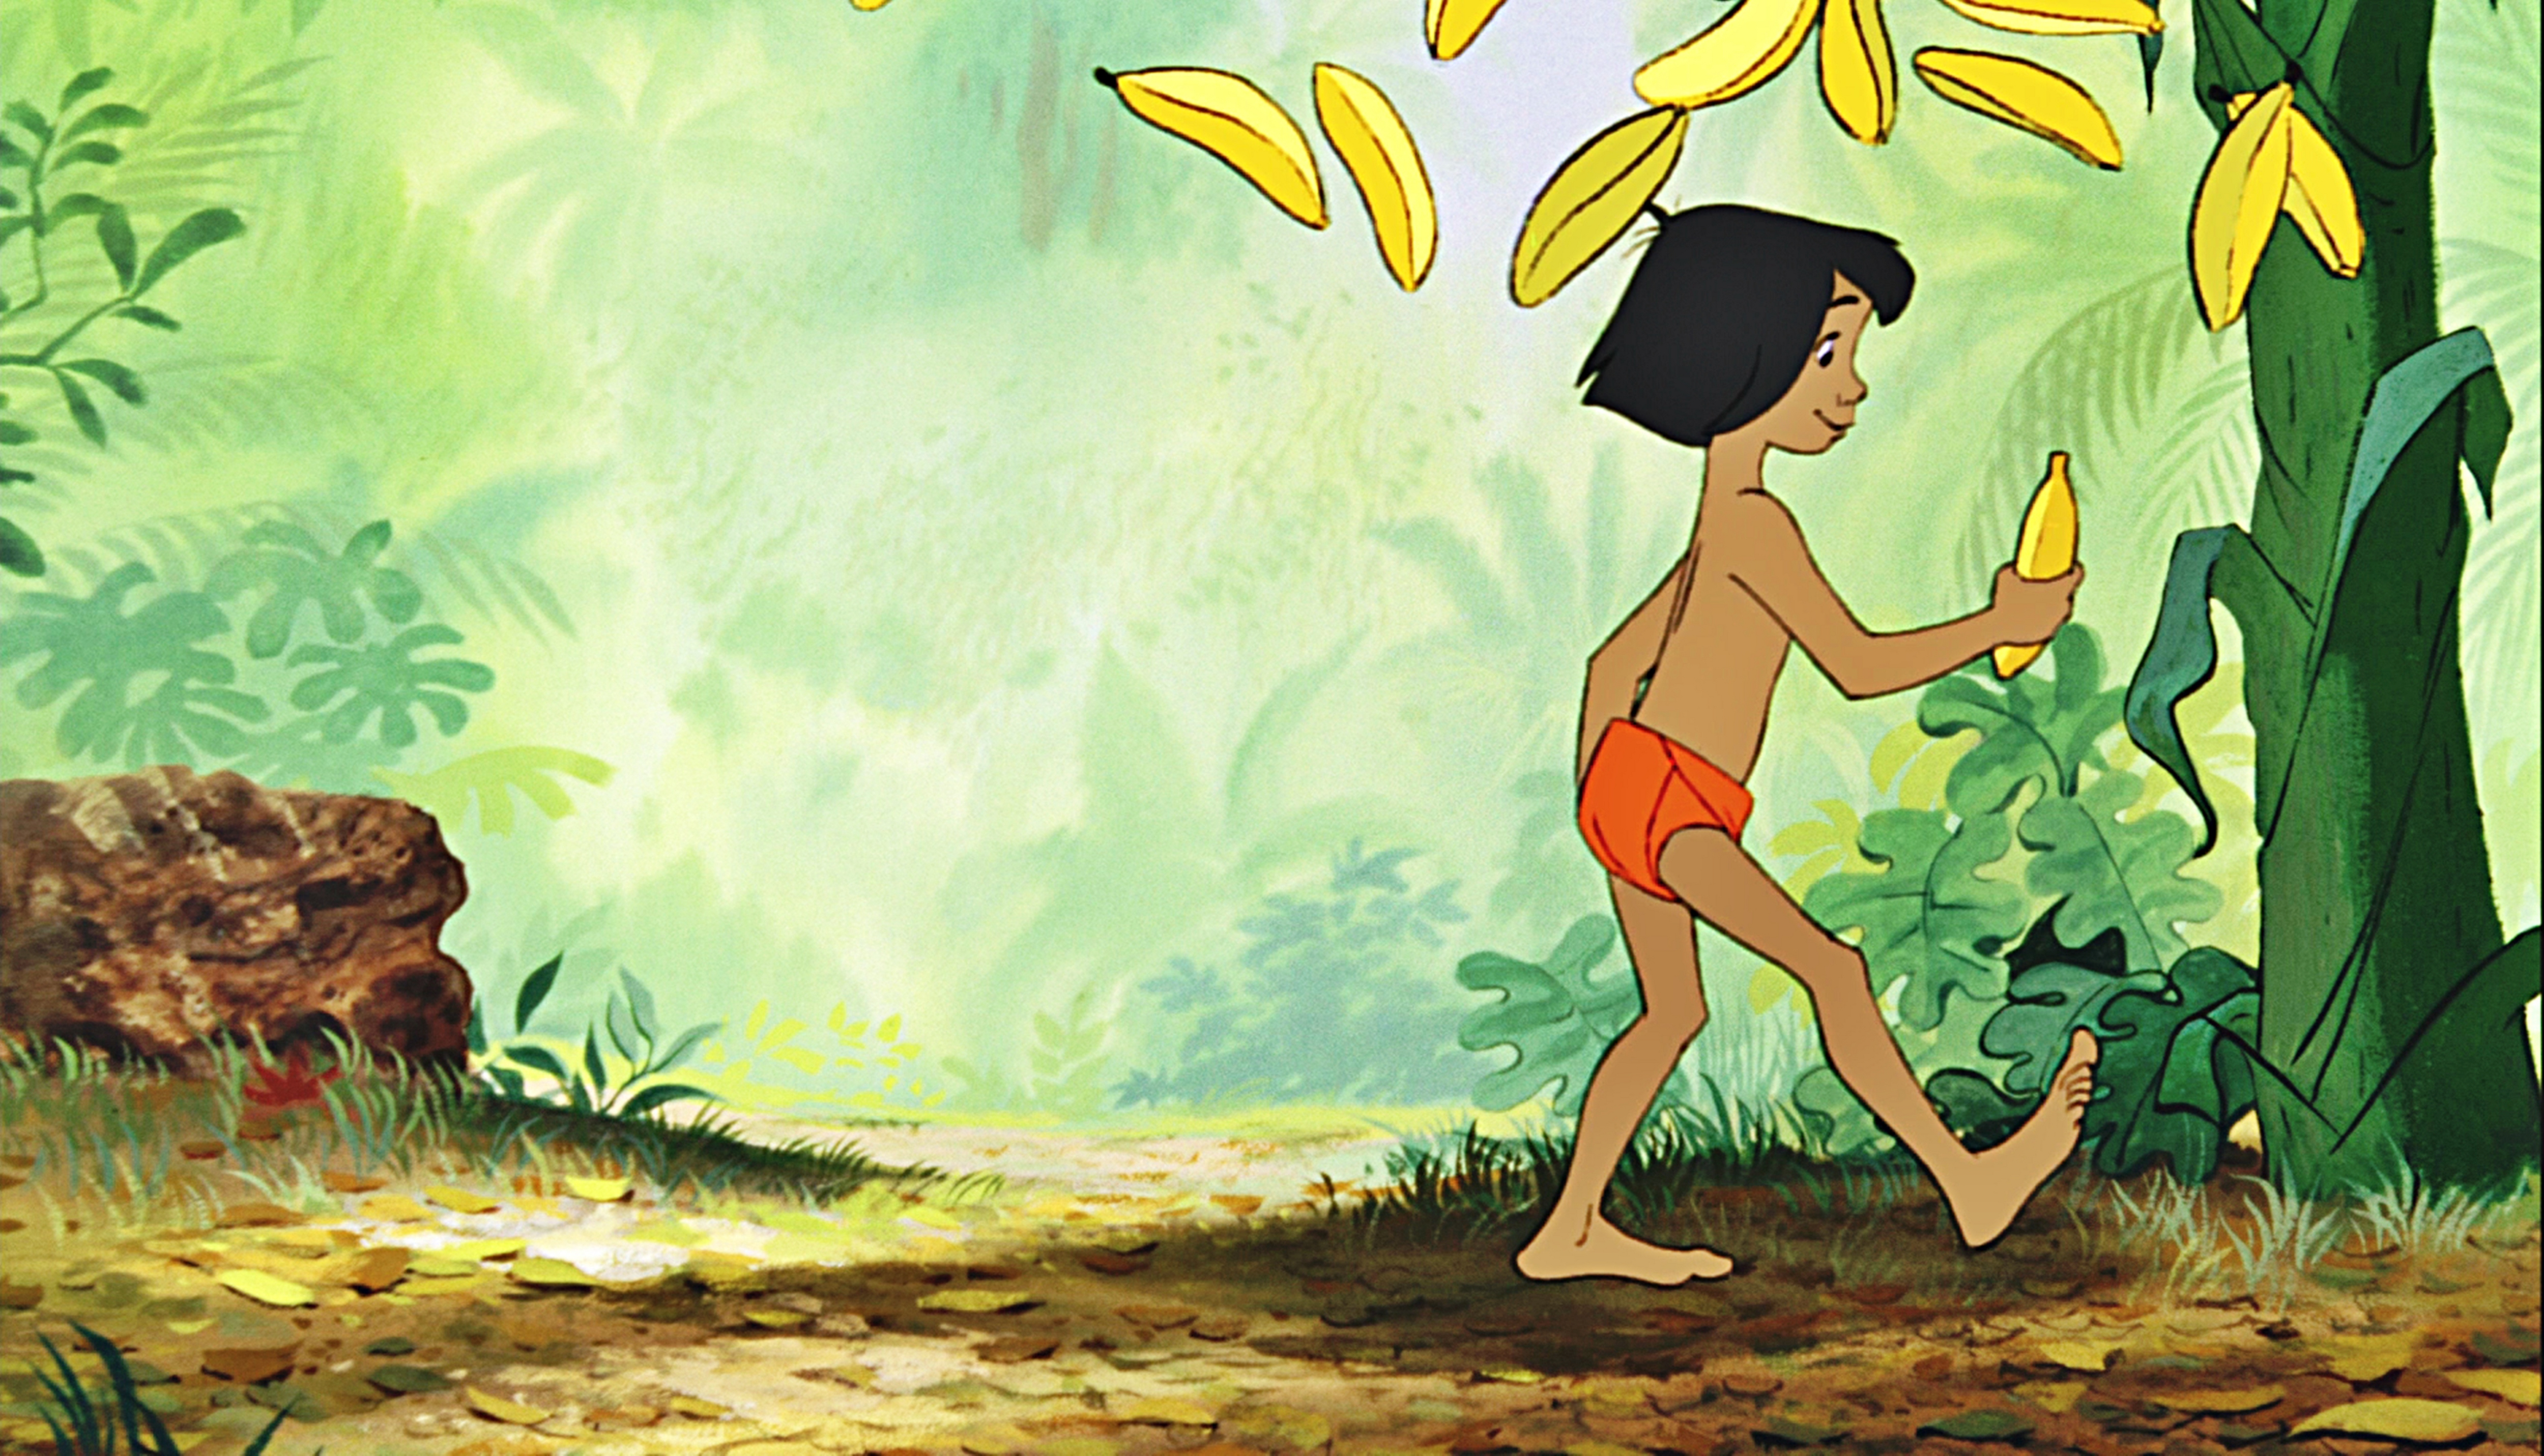 Walt-Disney-Screencaps-Mowgli-walt-disney-characters-35485110-5000-2862.jpg